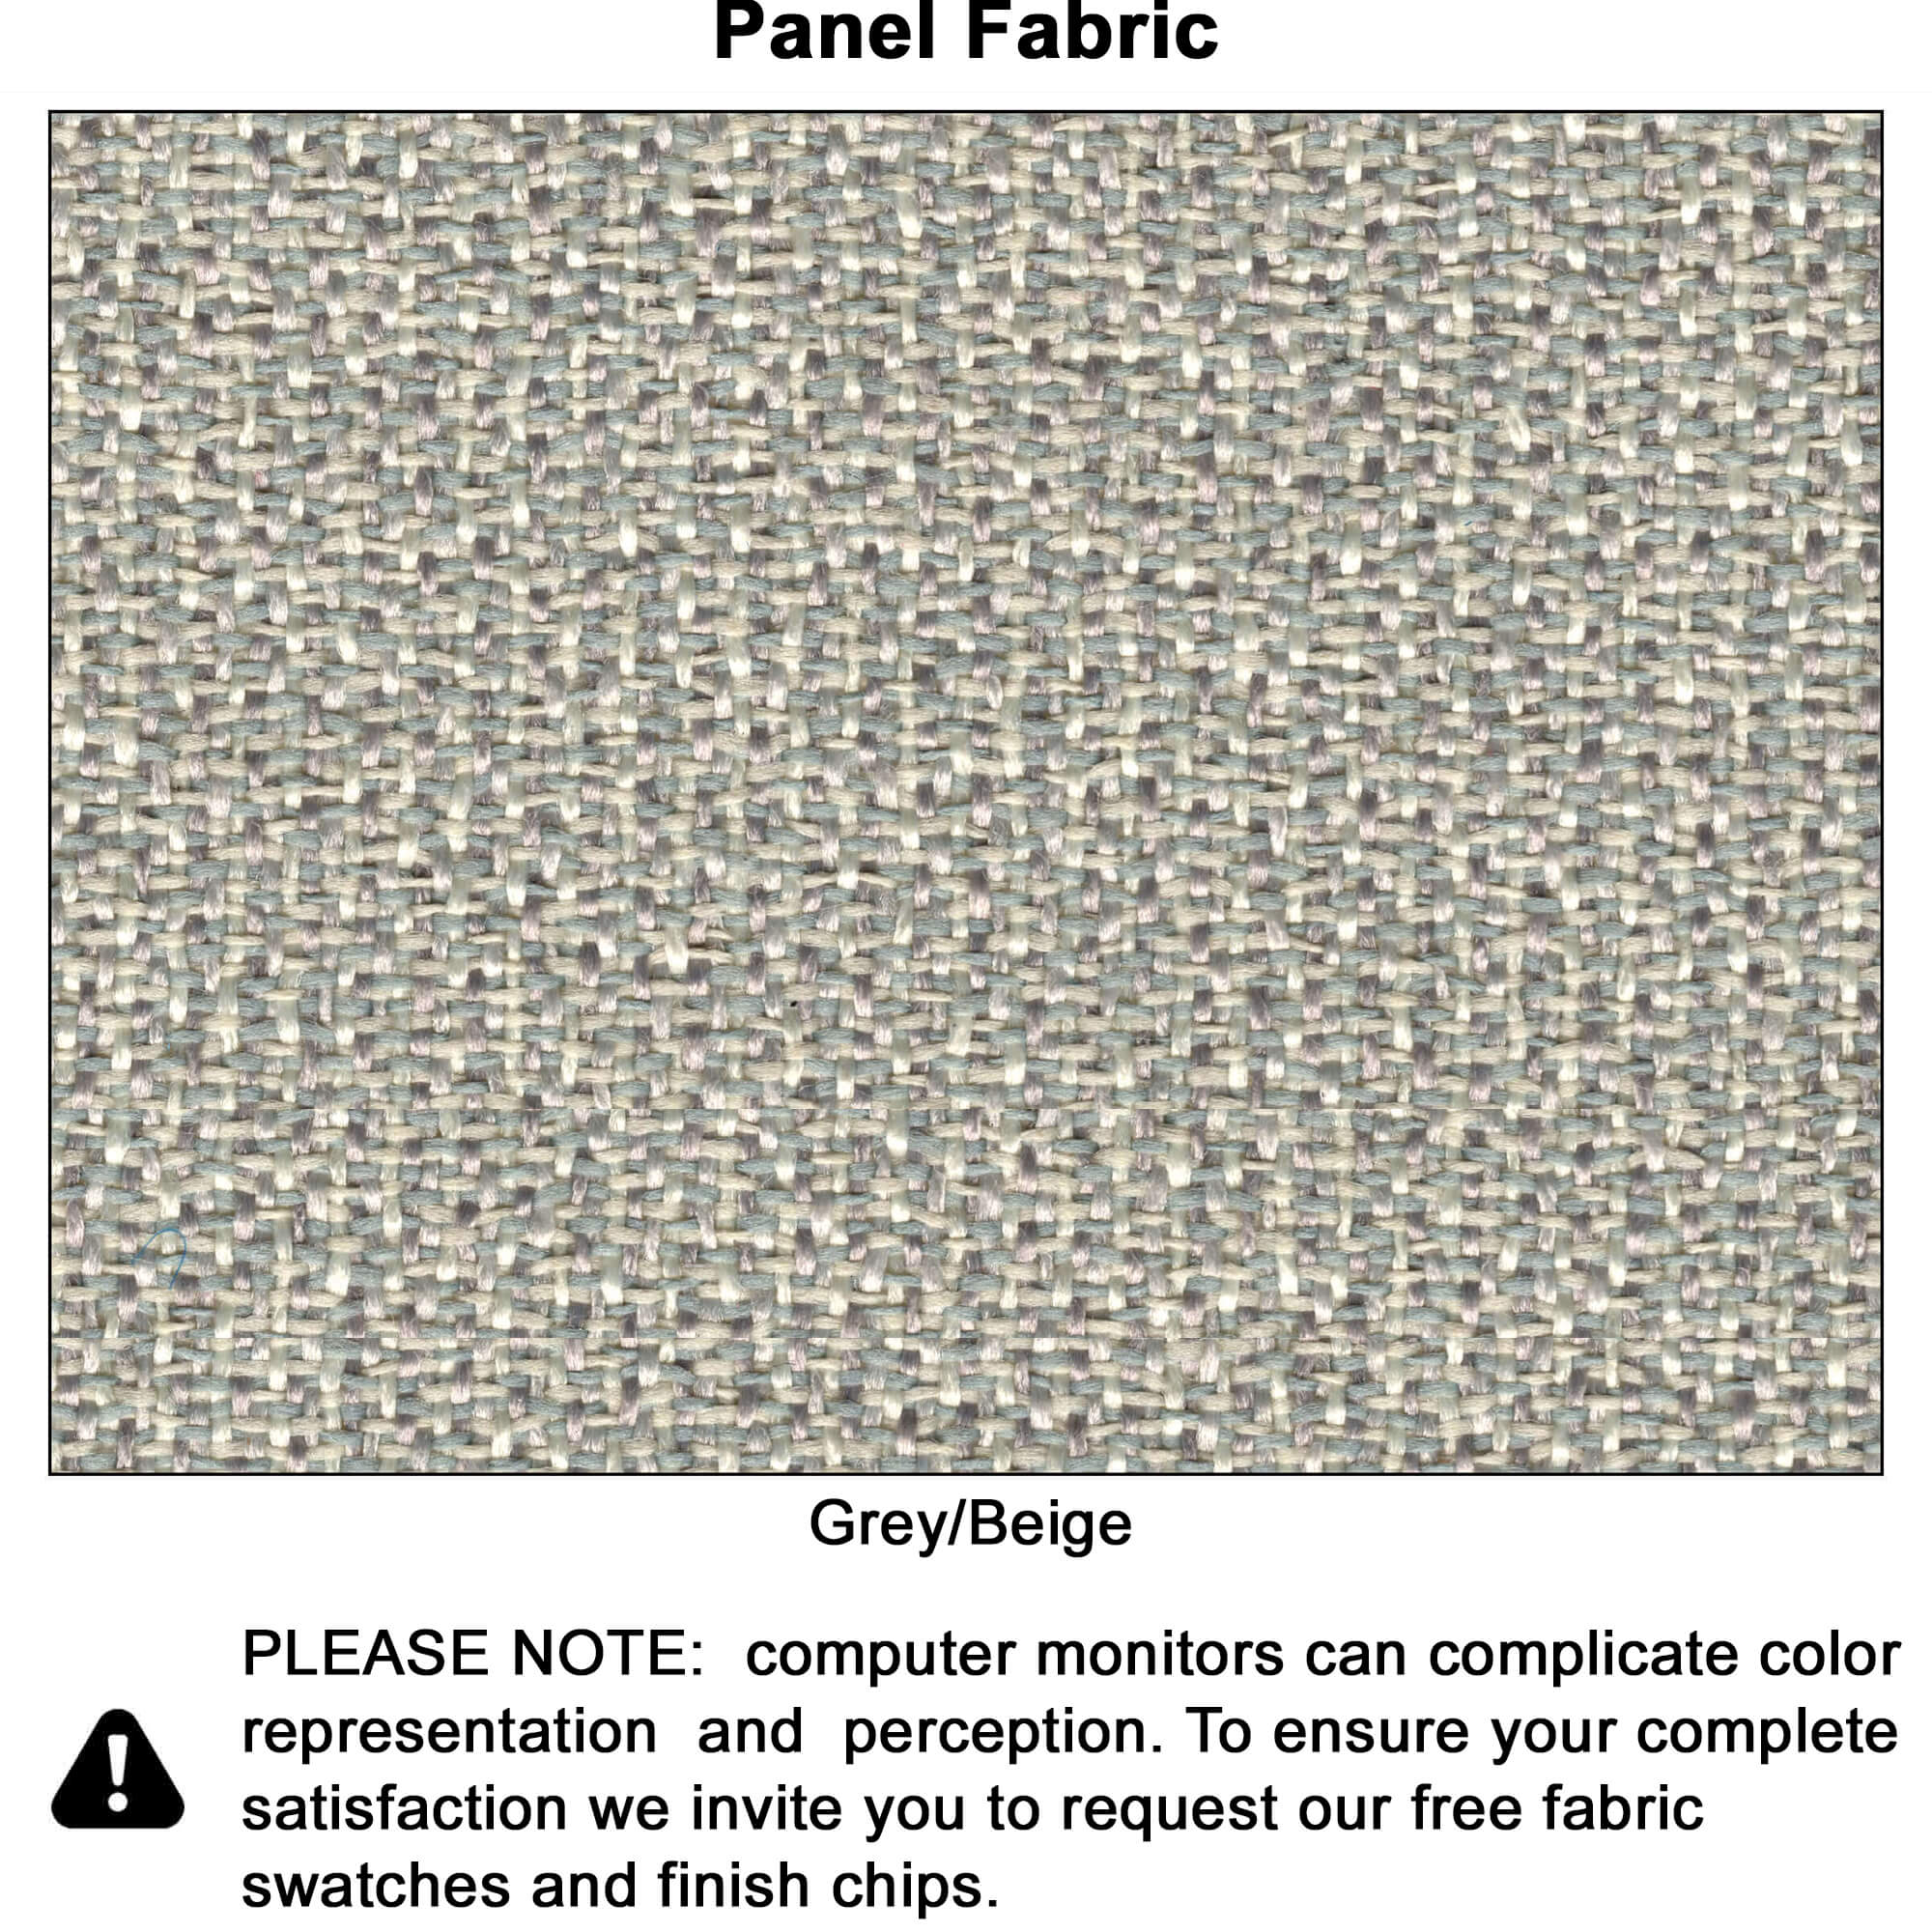 Hot desking fabric disclaimer